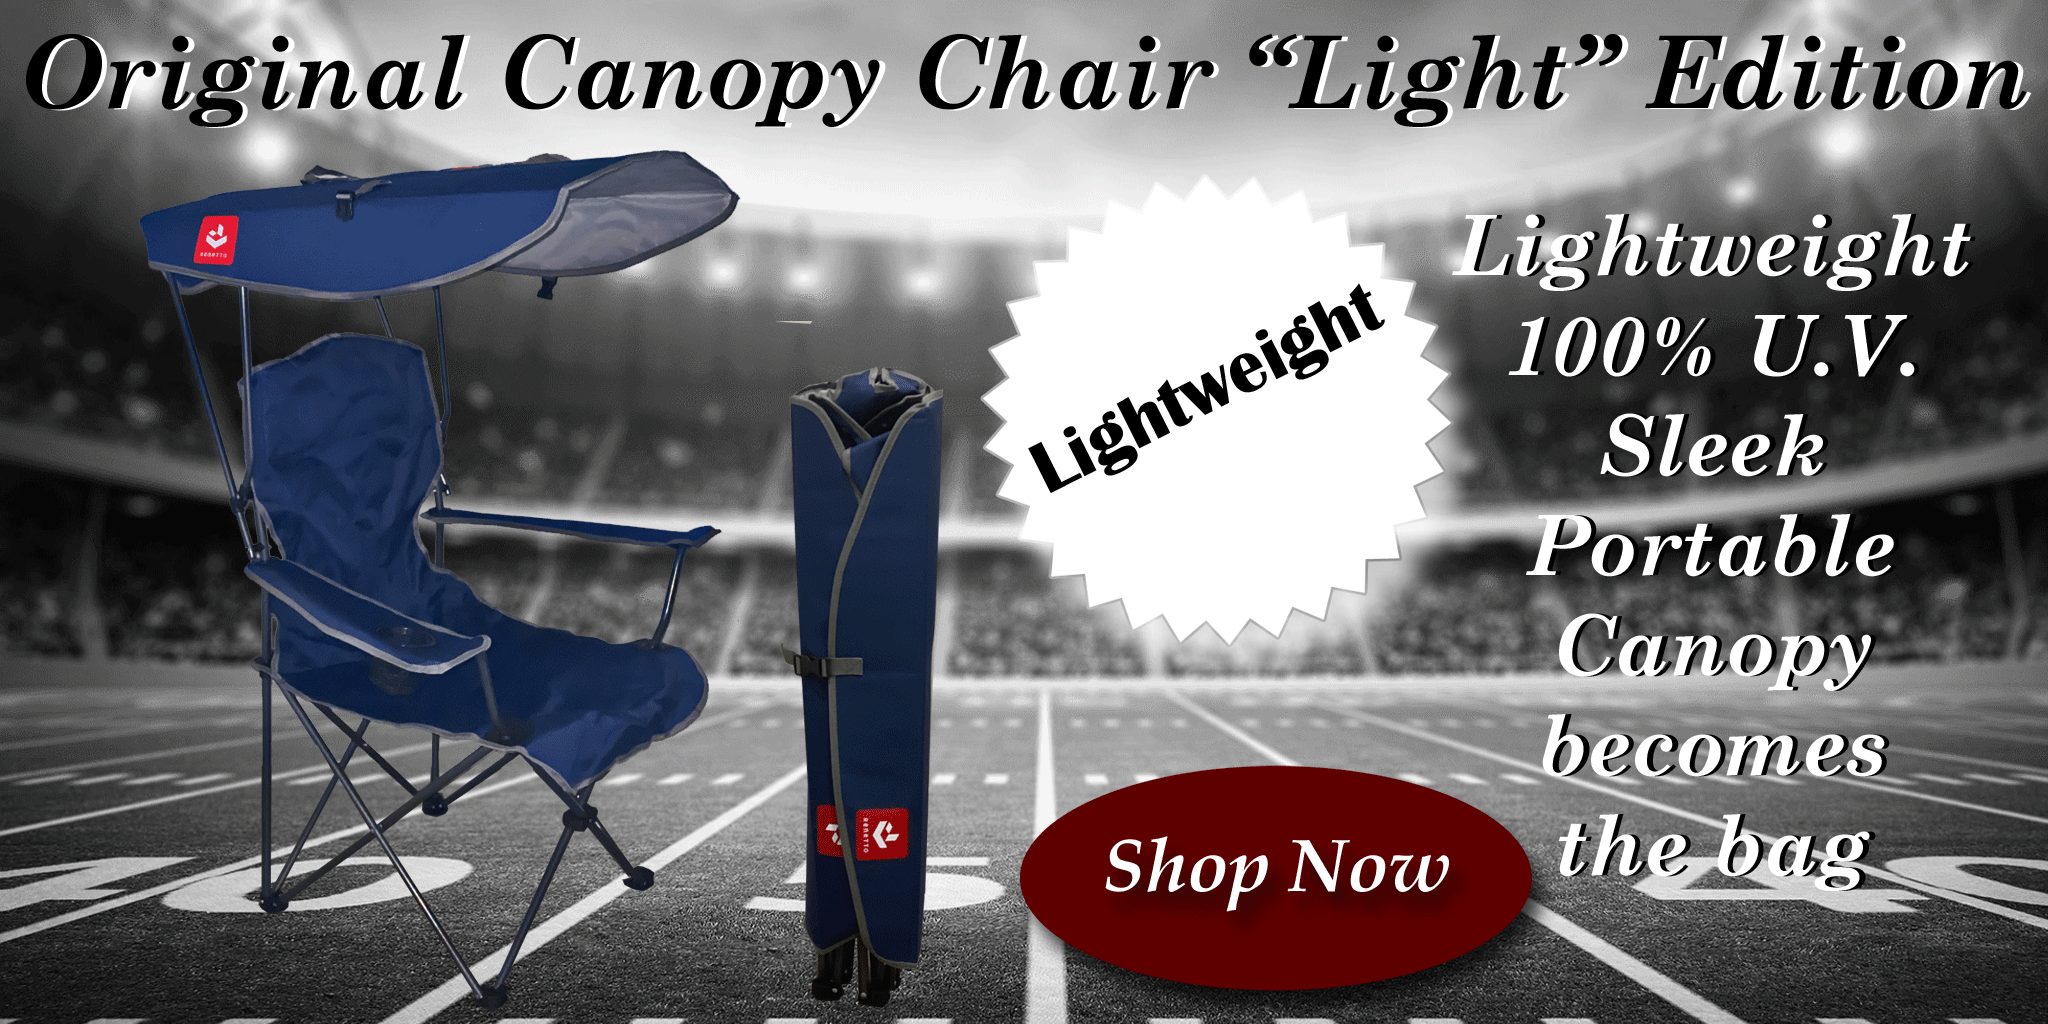 Original Canopy Chair light edition